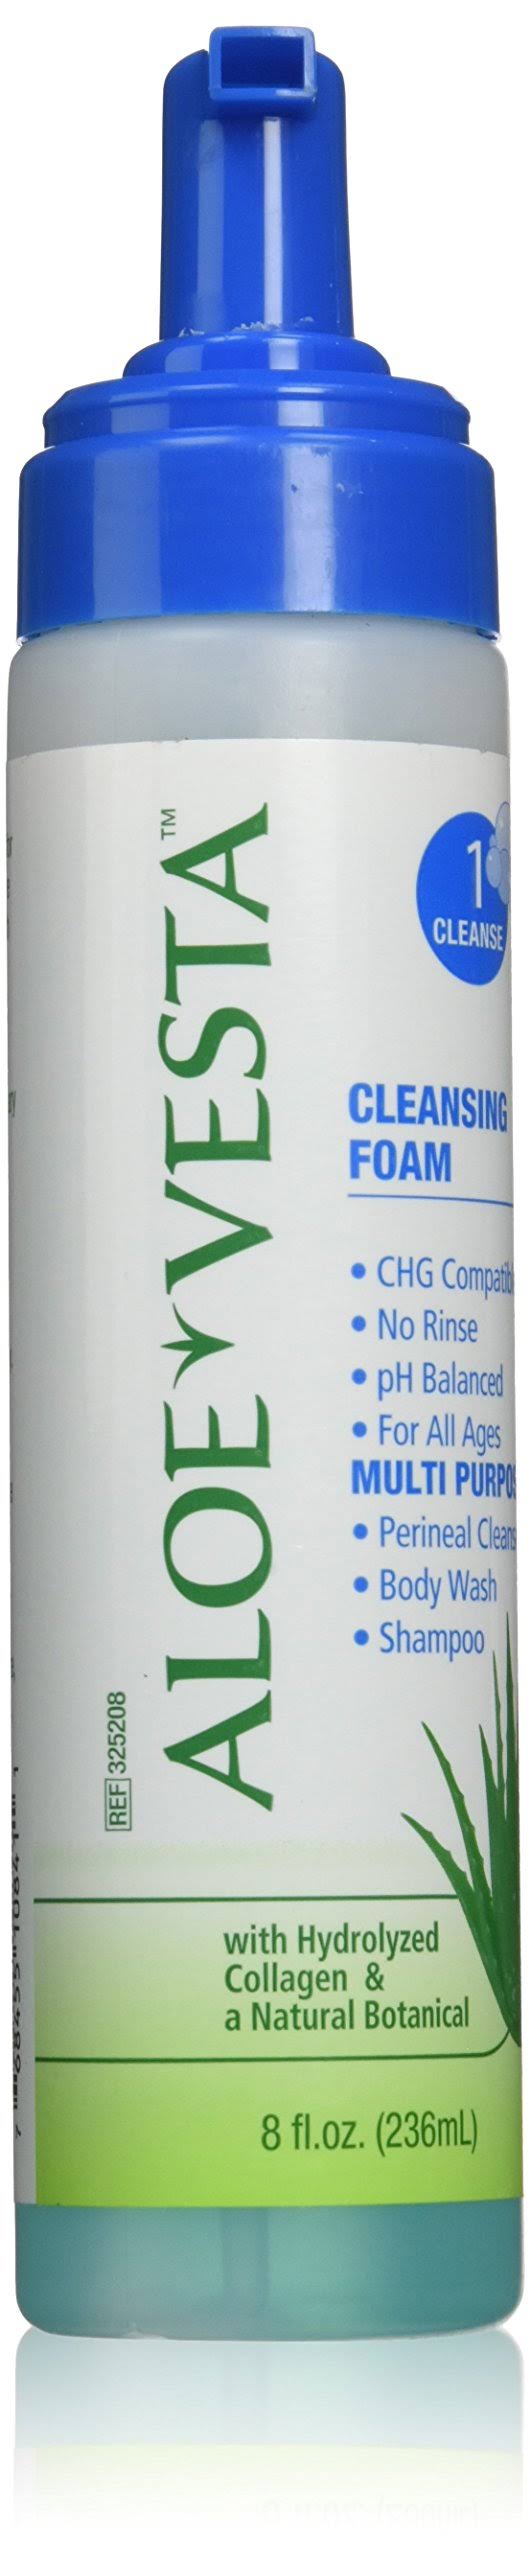 Convatec Aloe Vesta Cleansing Foam - 8 Oz